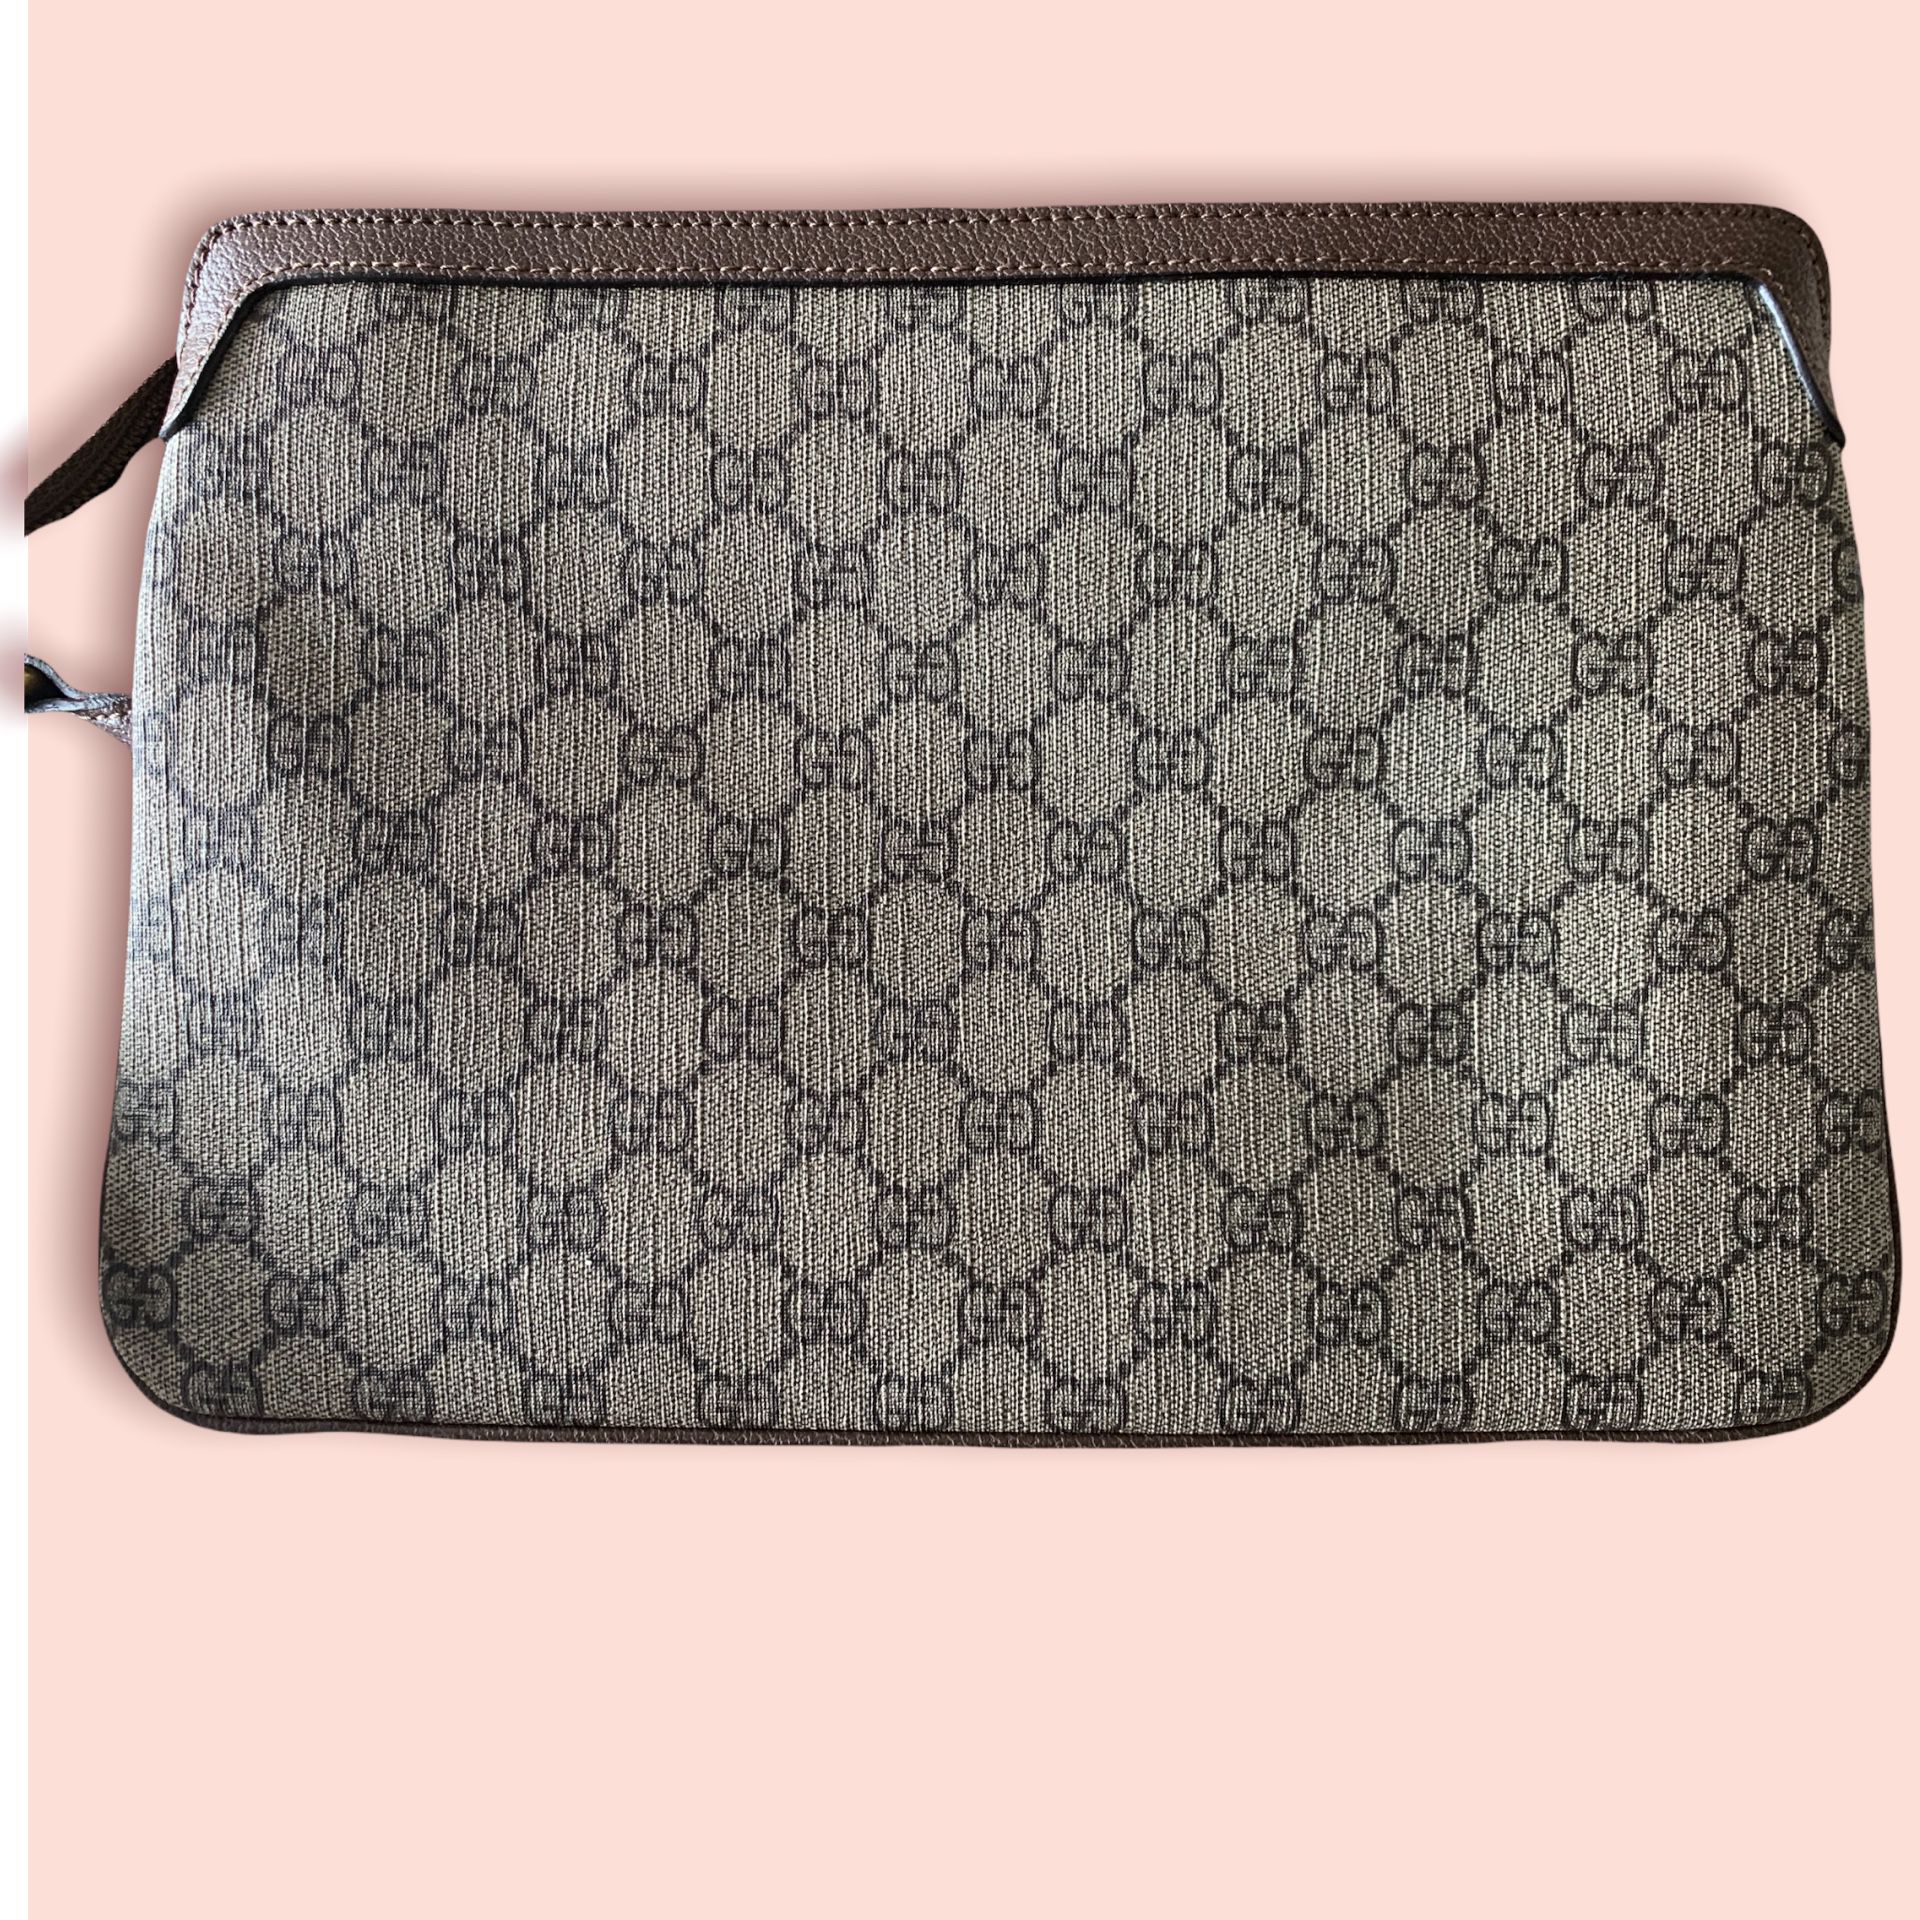 Gucci GG Supreme Medium Shoulder Bag